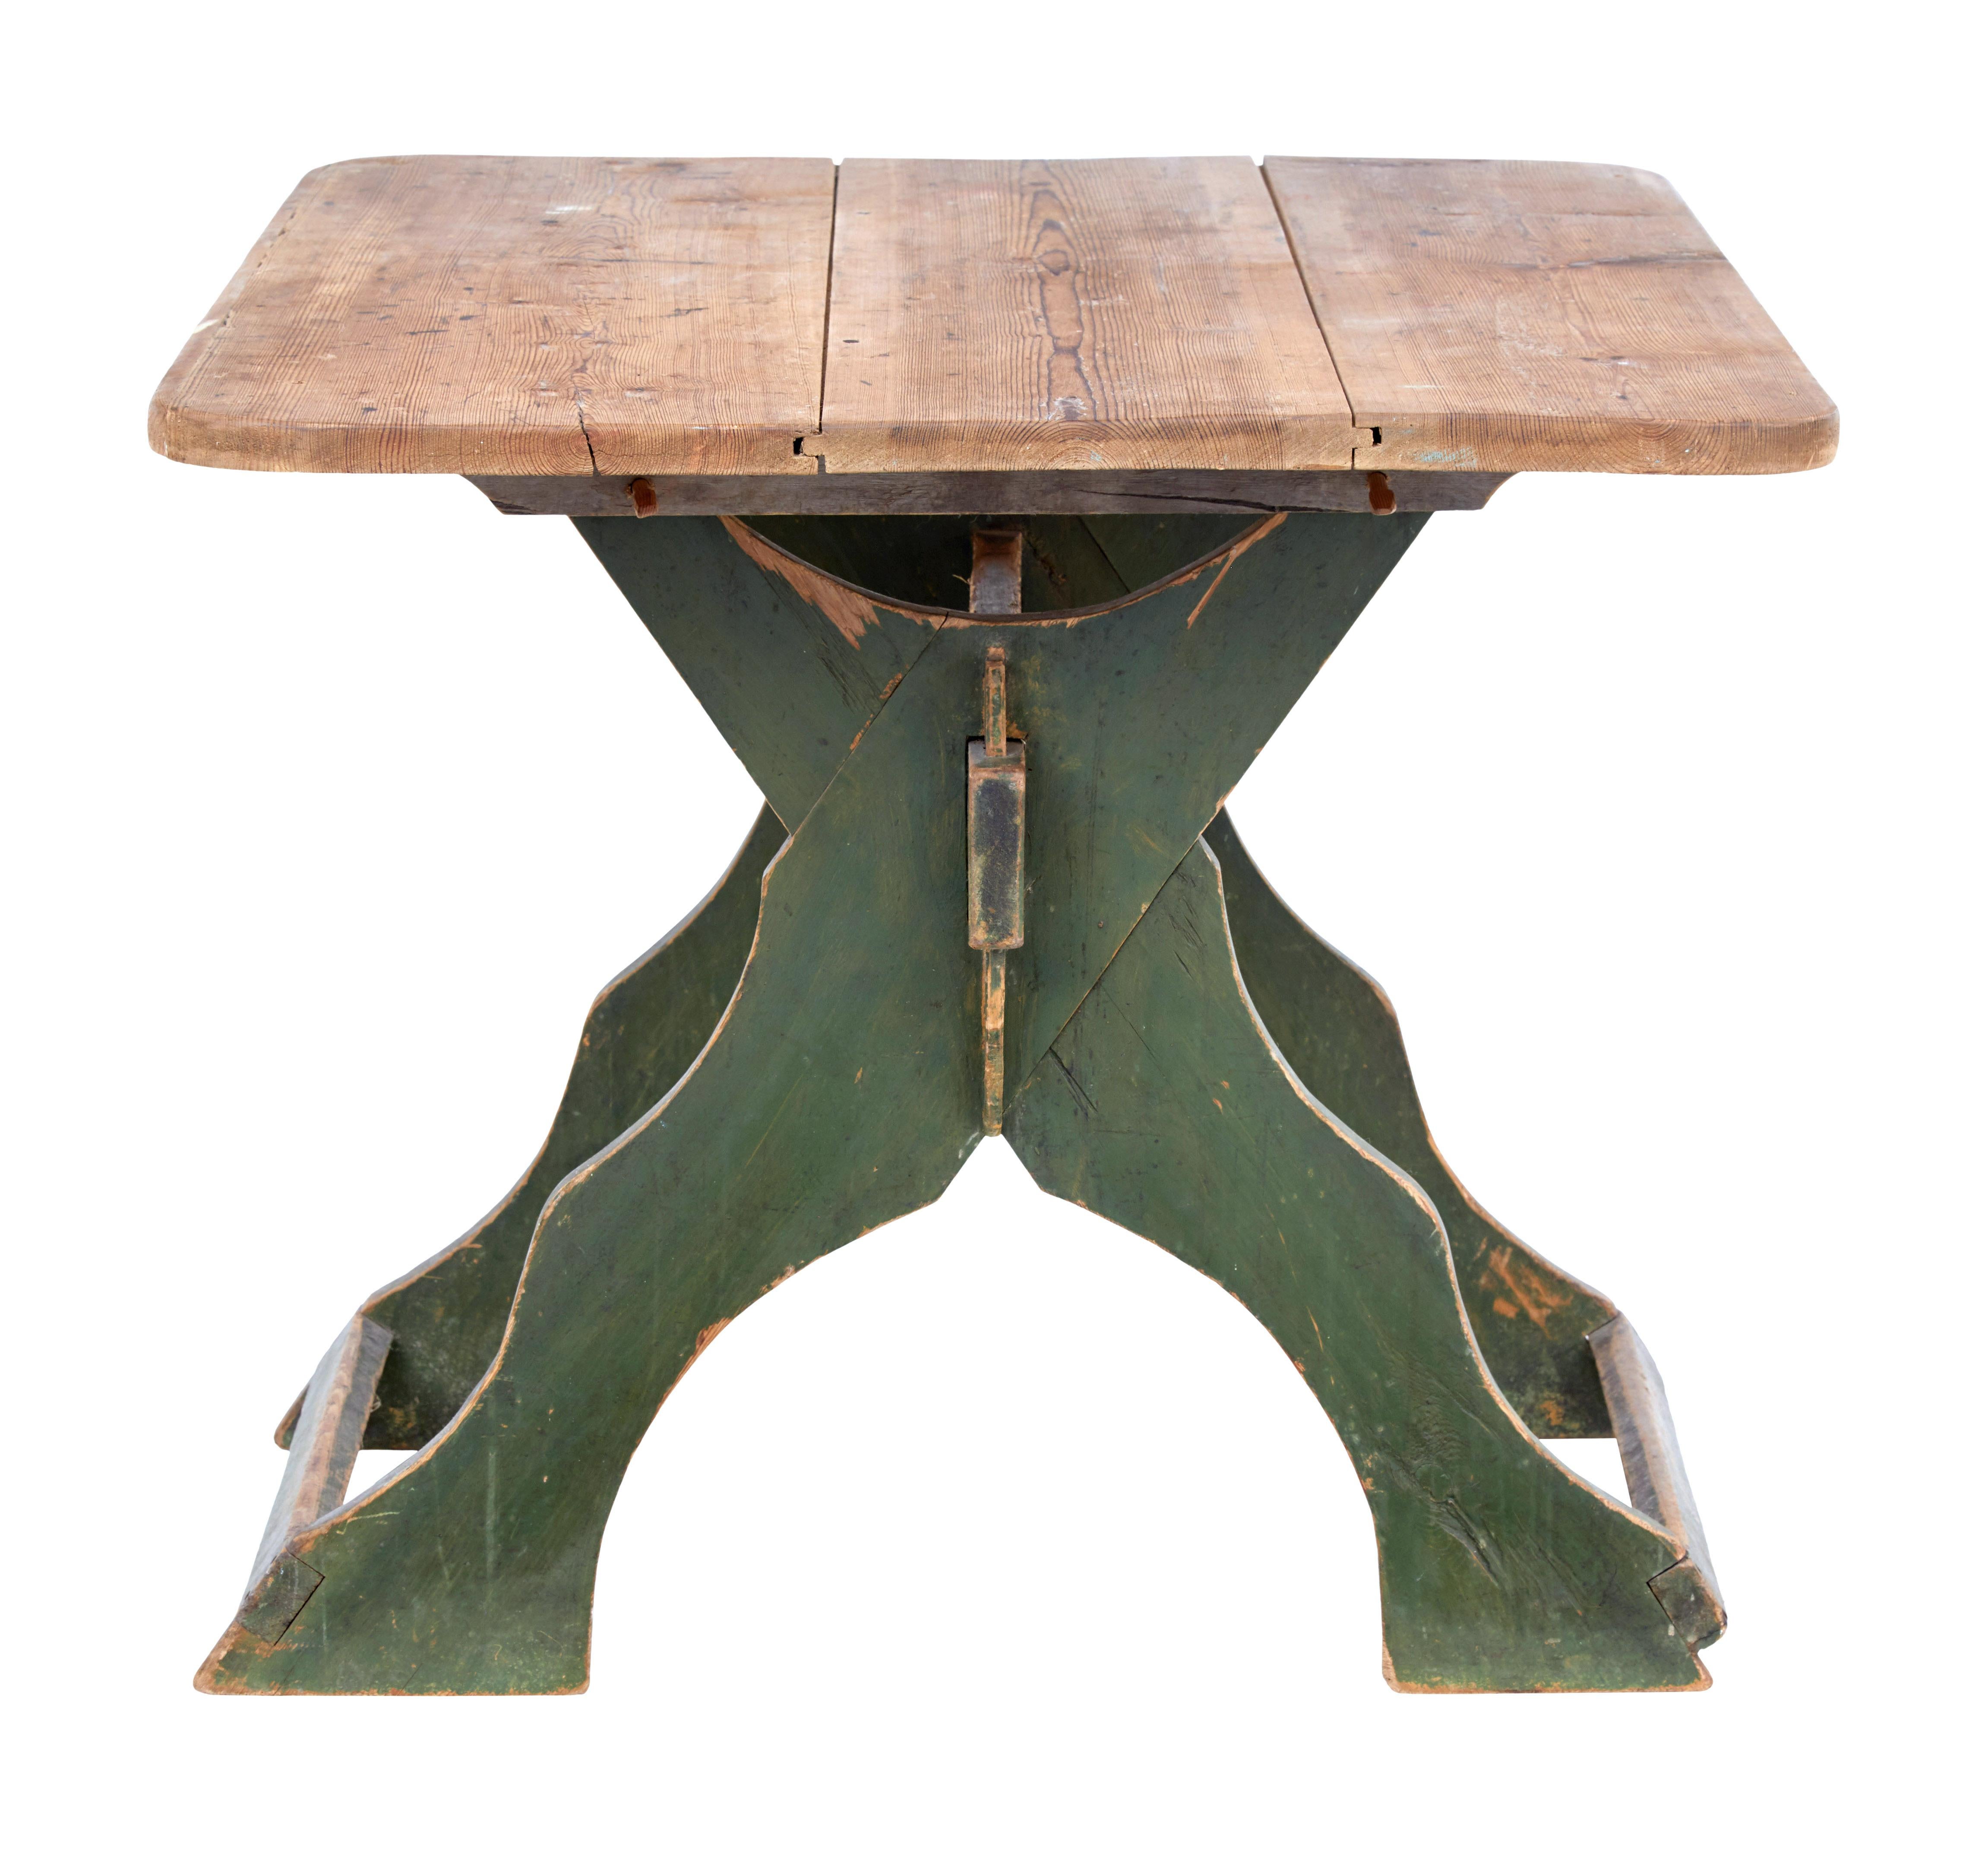 19th Century Painted Pine Swedish Trestle Table (Rustikal)